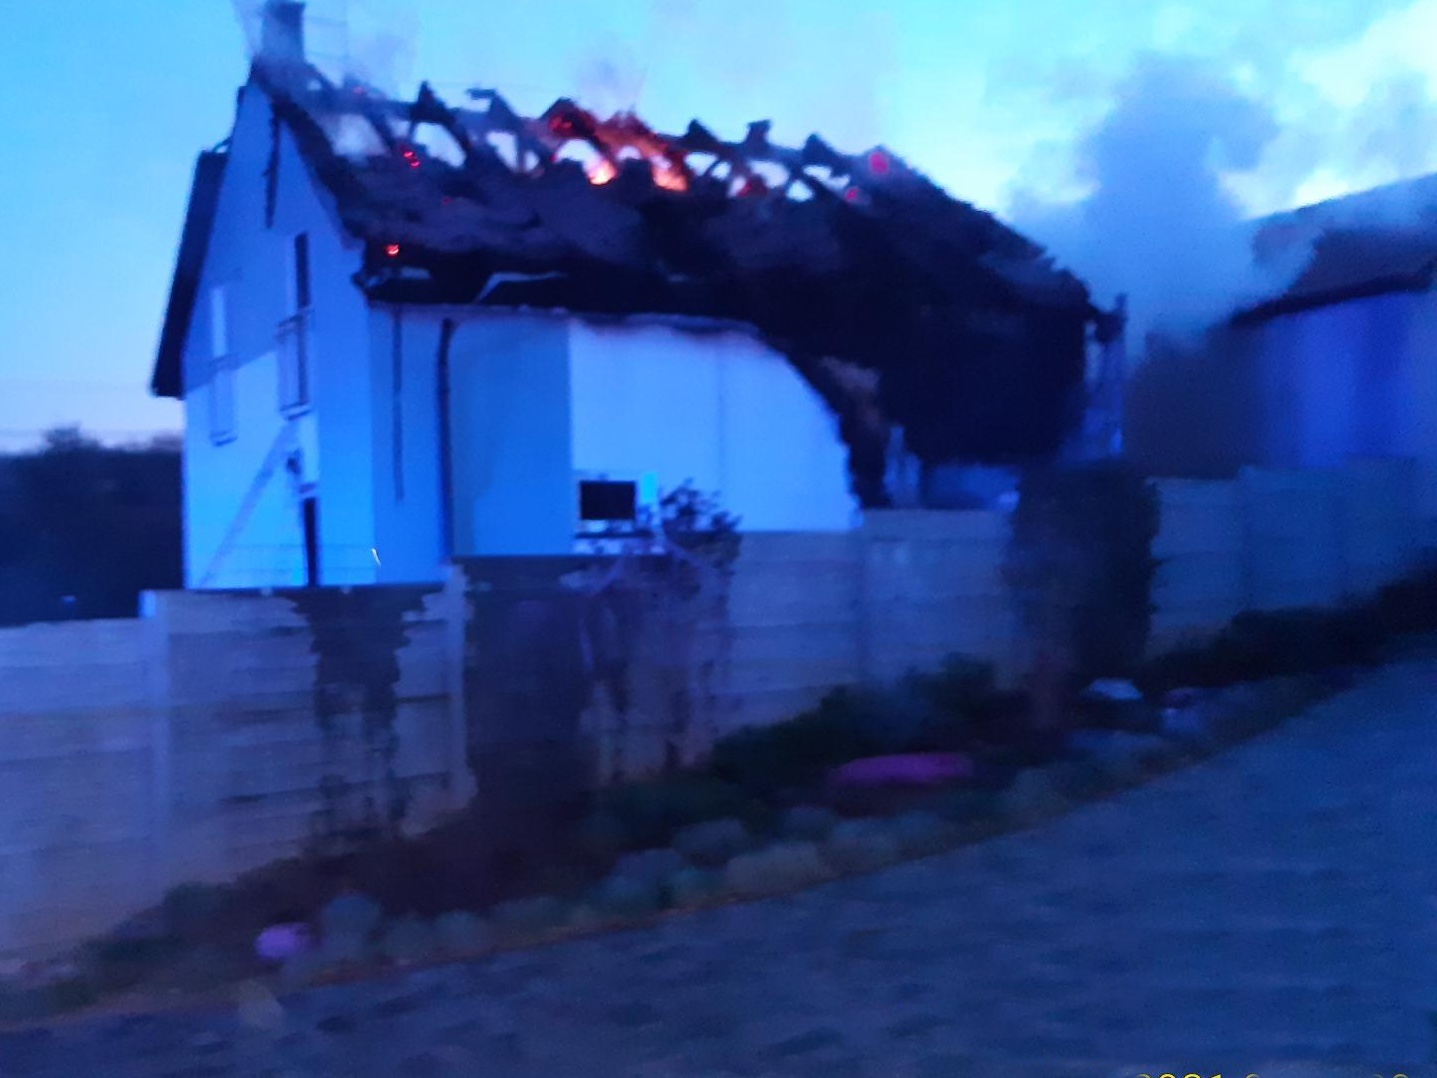 032 - Požár rodinného domu v obci Rovina na Berounsku.jpg